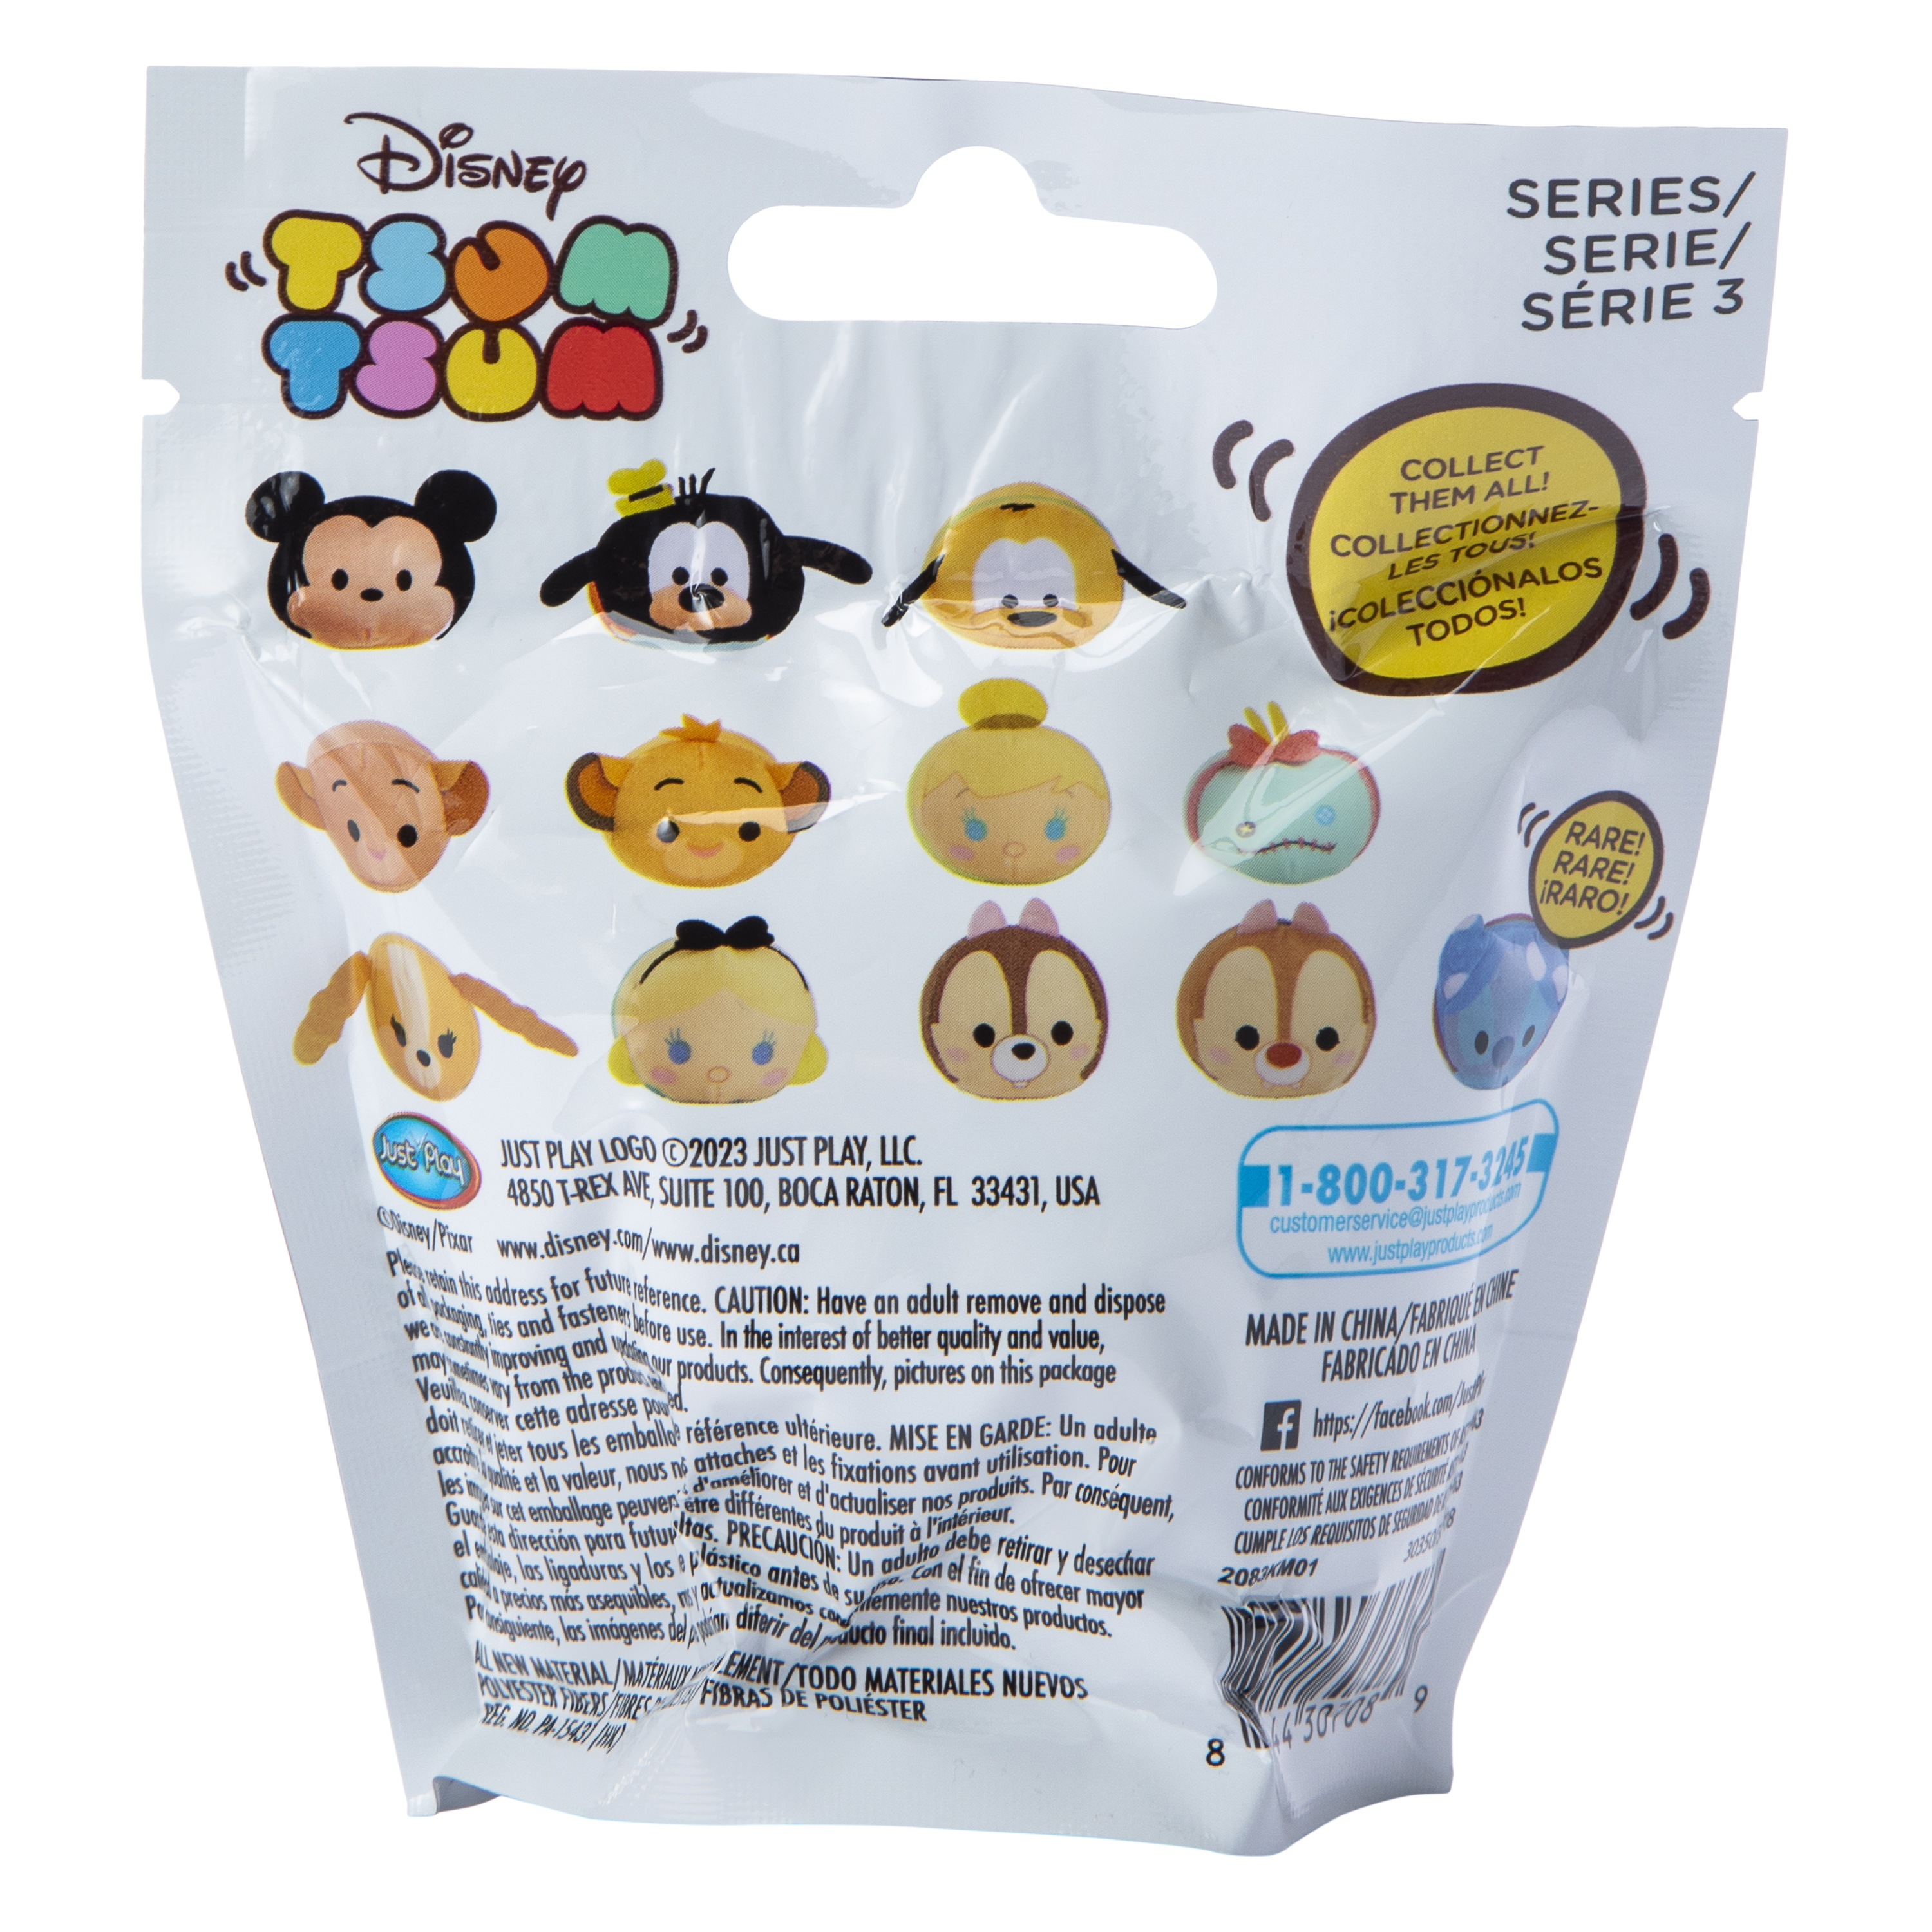 Disney Tsum Tsum Collectible Plush Series 3 Blind Bag